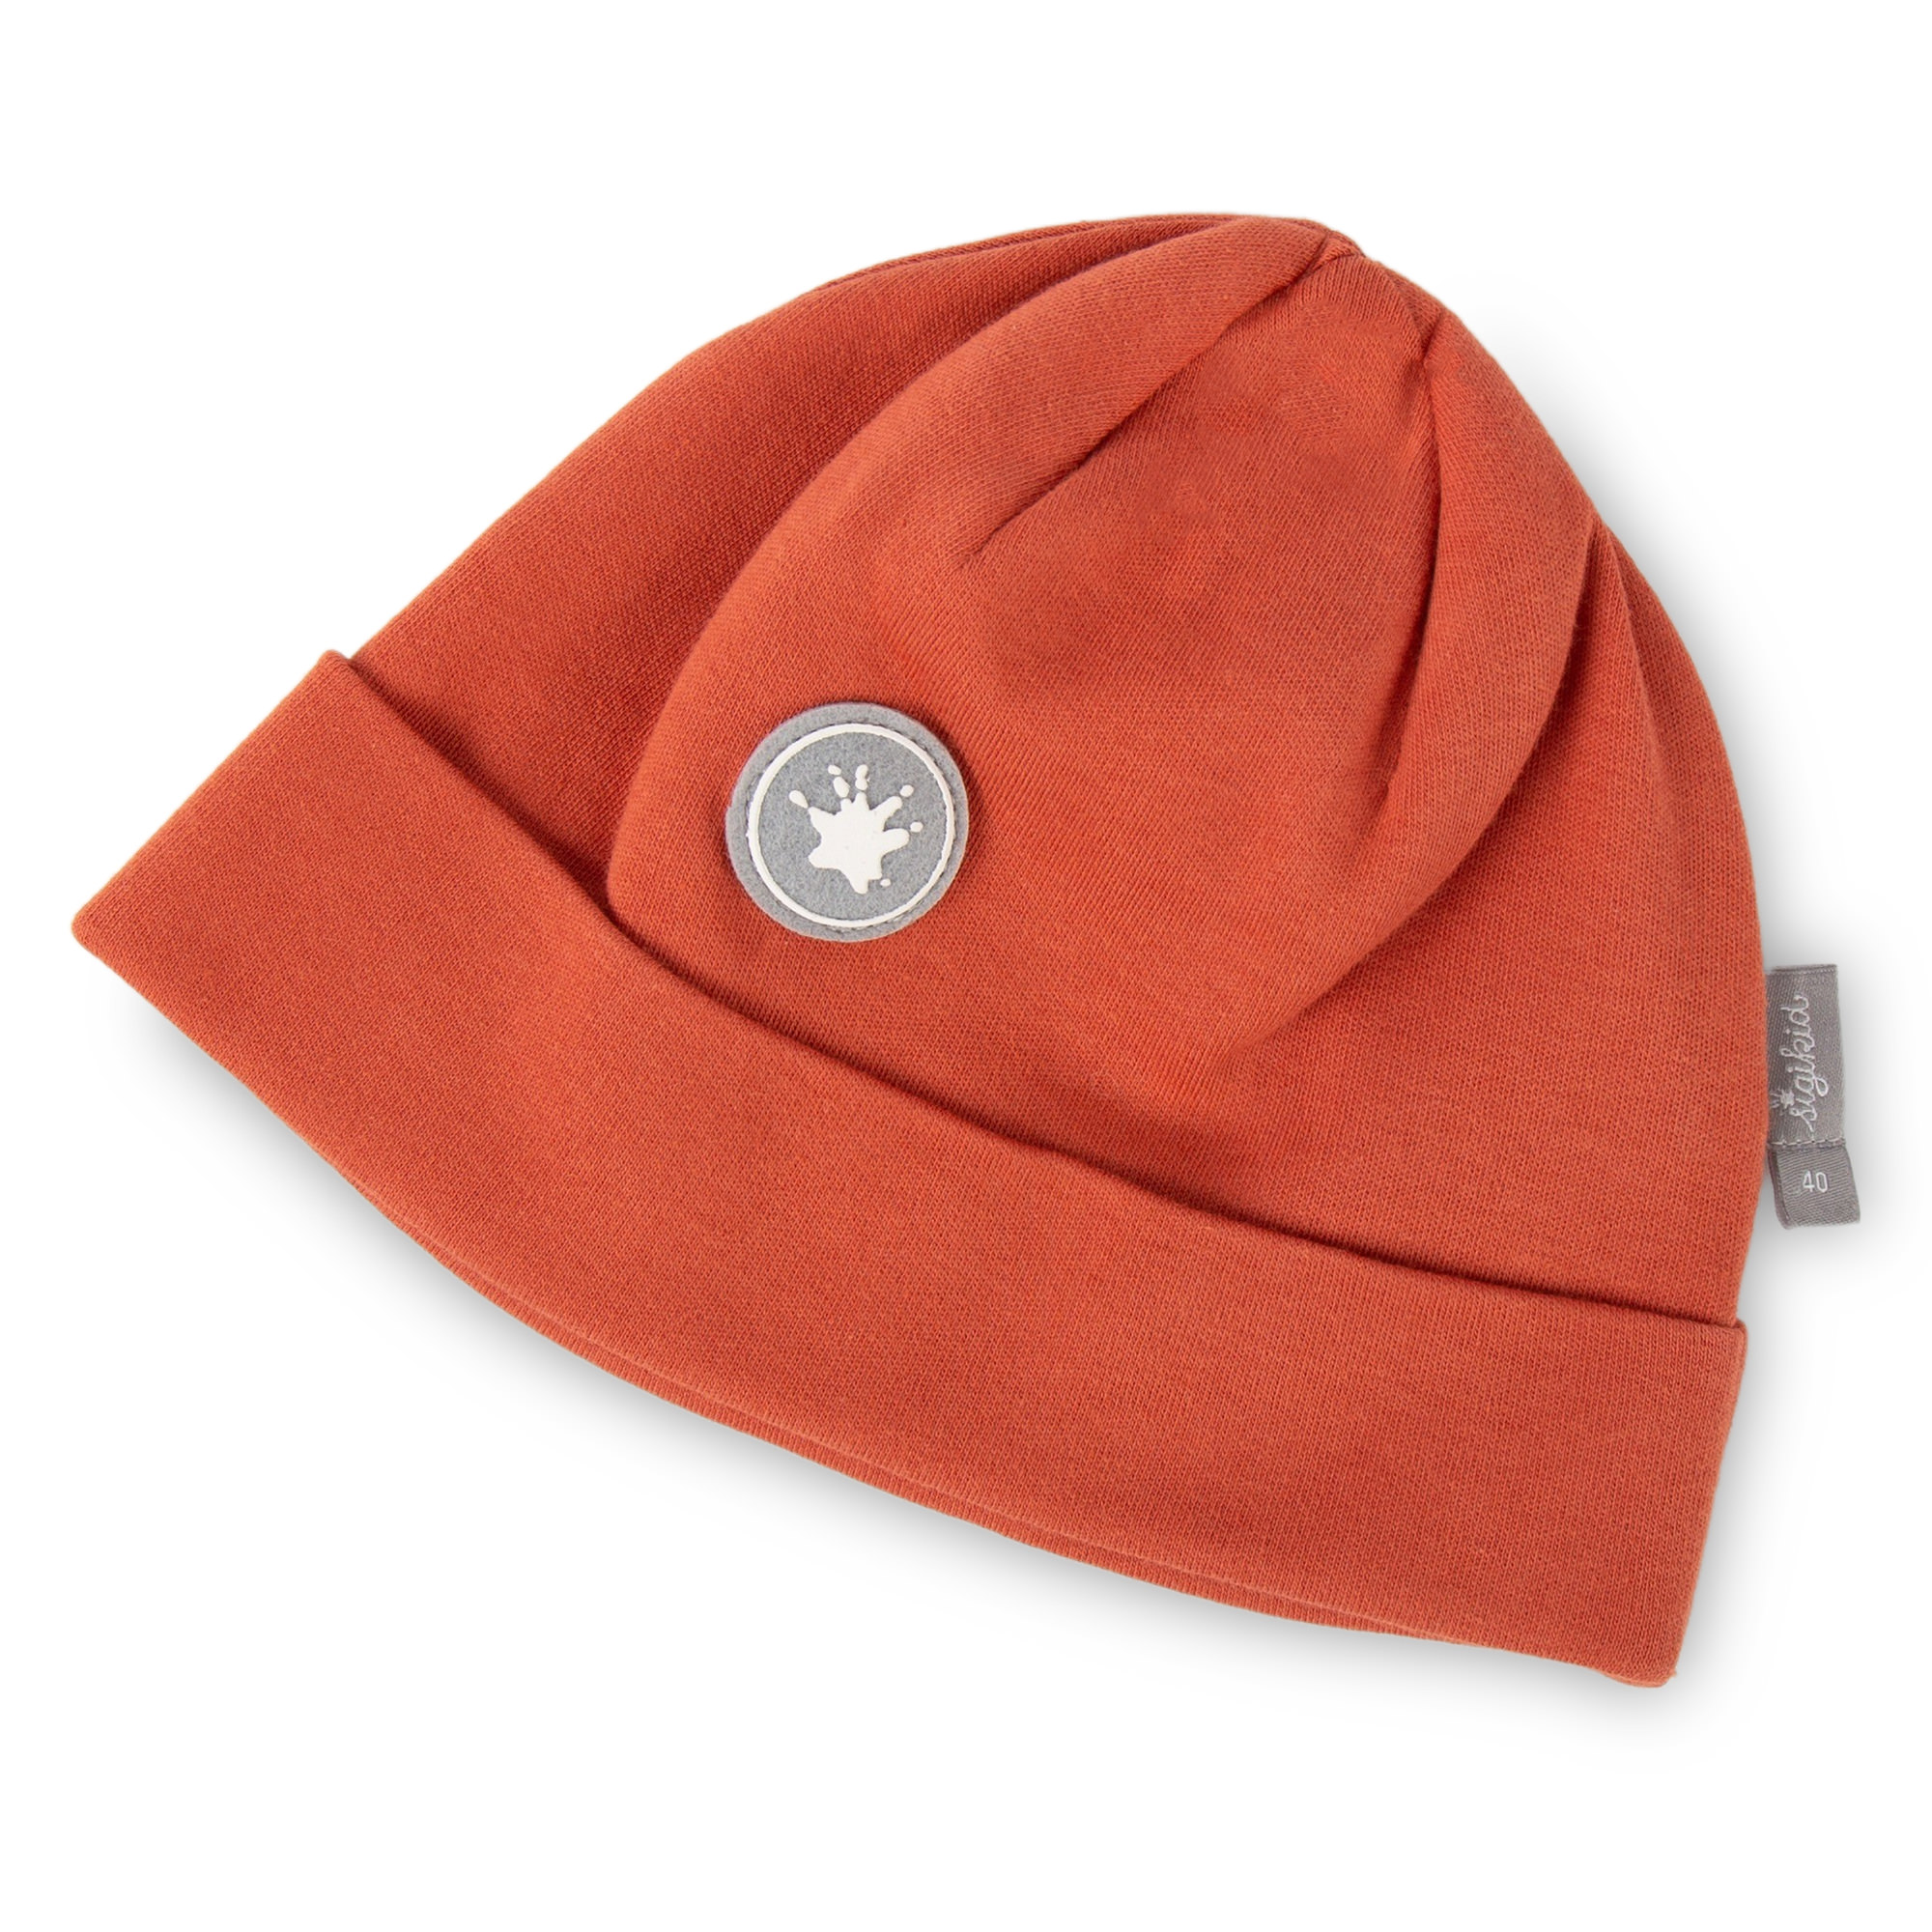 Snug baby beanie hat, double-layered, orange